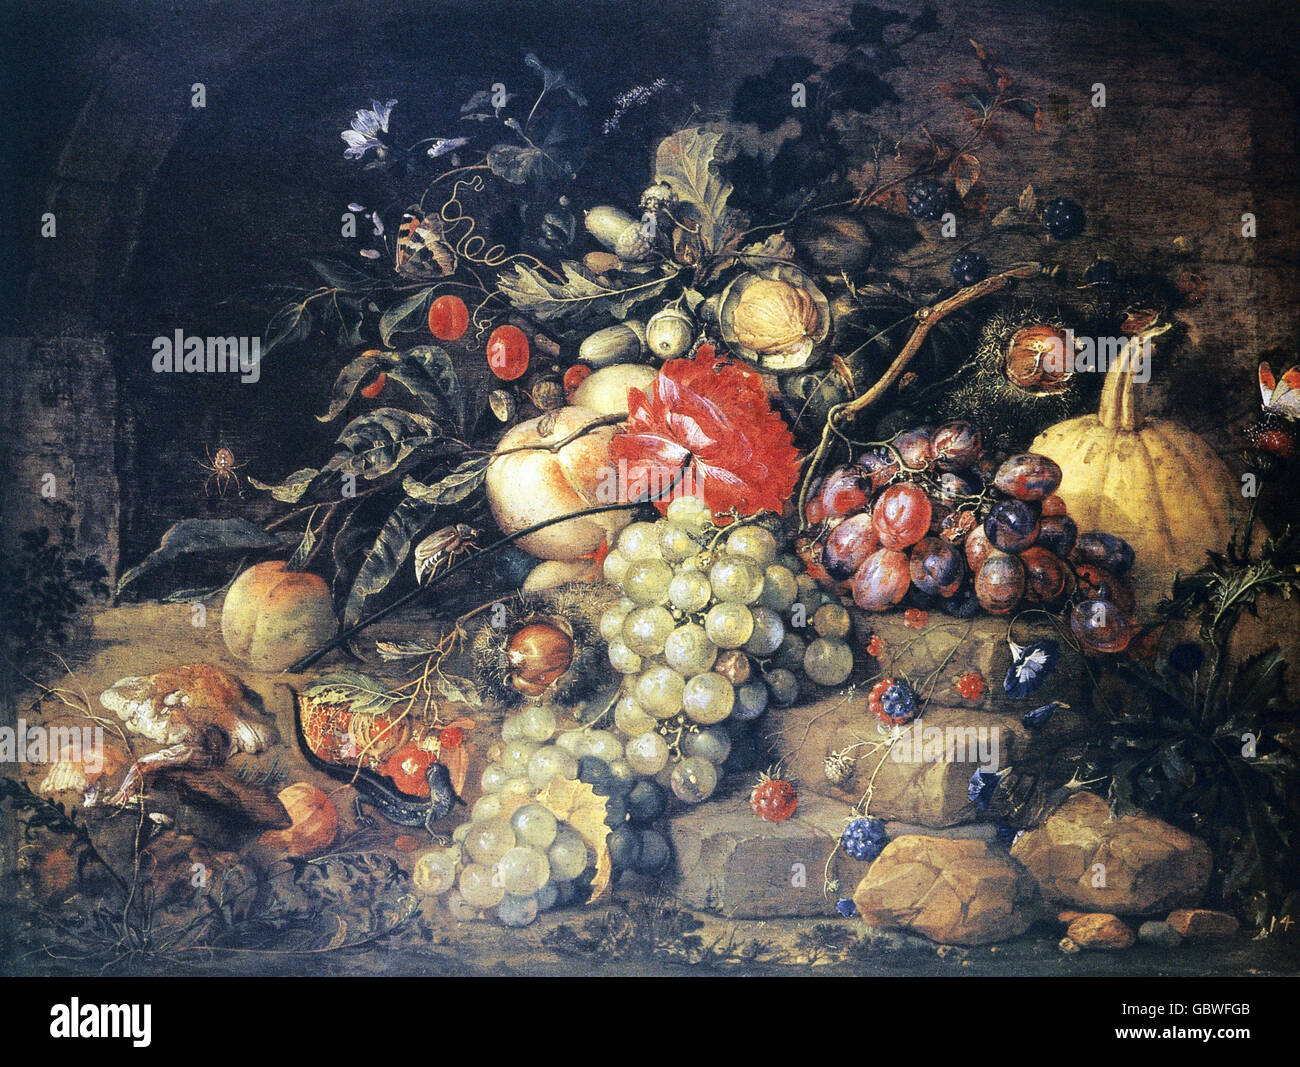 fine arts, Heem, Jan Davidszoon de (1606 - 1684), painting, 'Fruits in front of Old Brickwork', oil on oakwood, Gallery Alte Meister, Dresden, Stock Photo